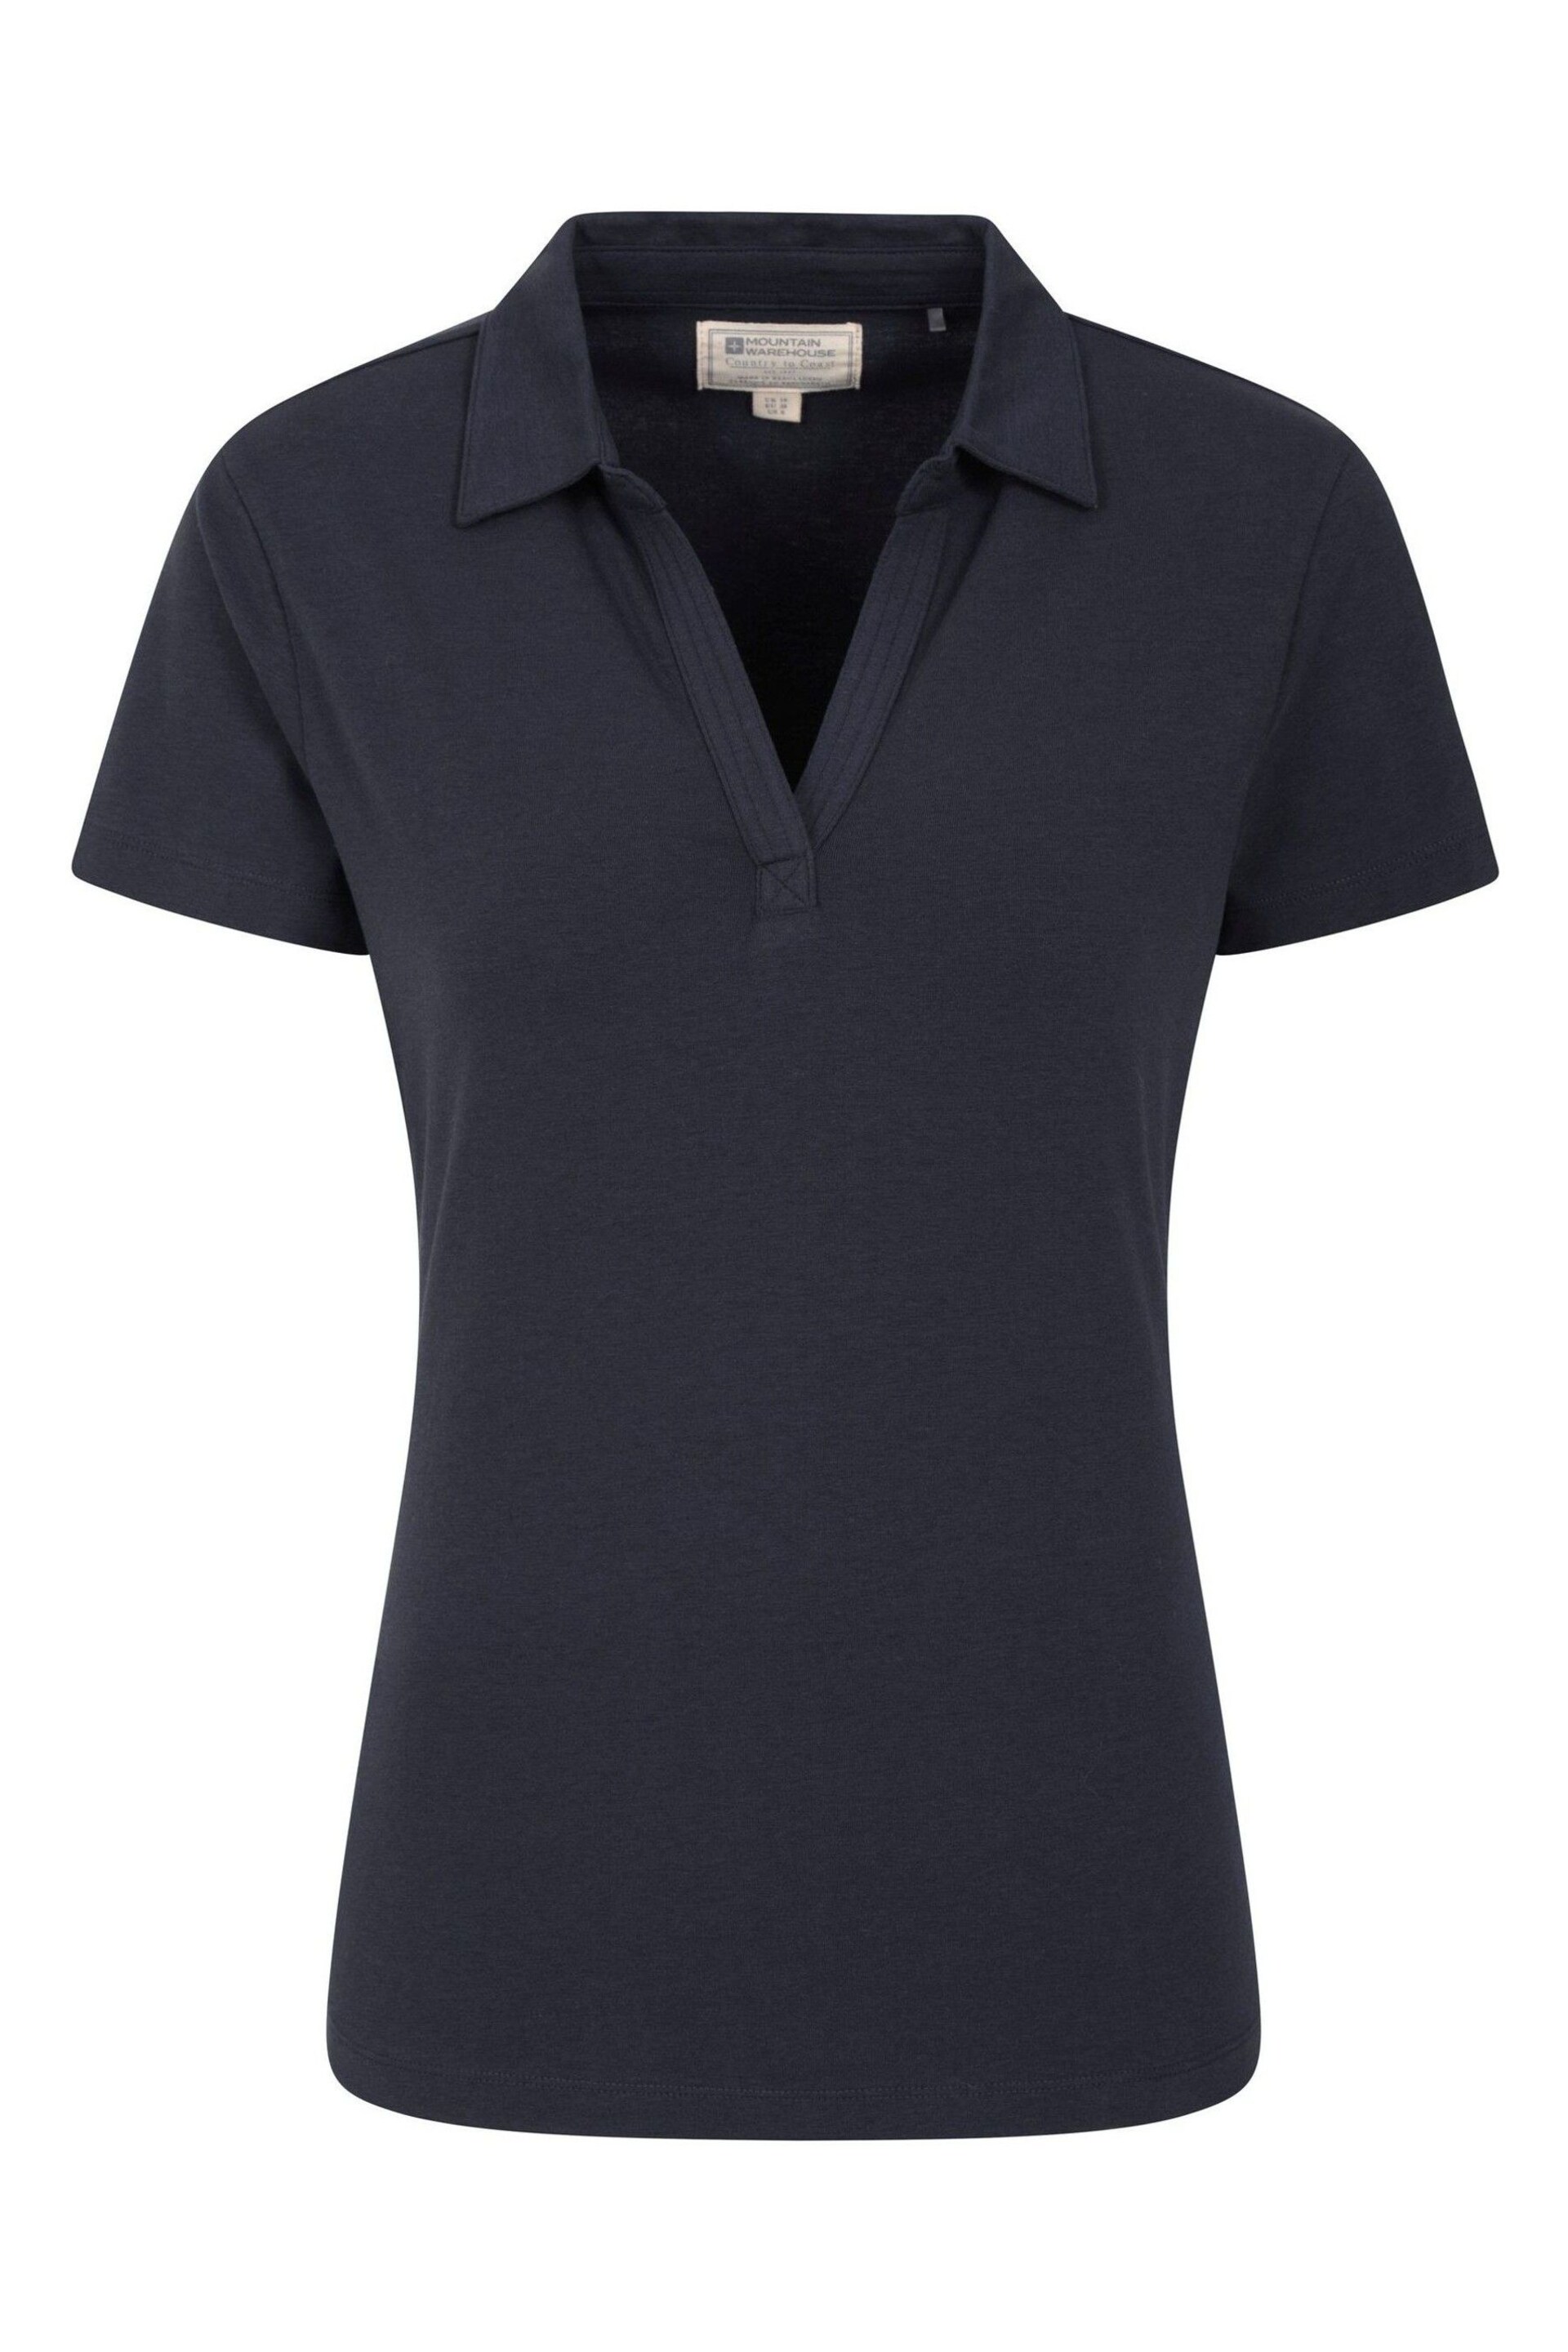 Mountain Warehouse Blue Womens UV Polo Shirt - Image 1 of 4